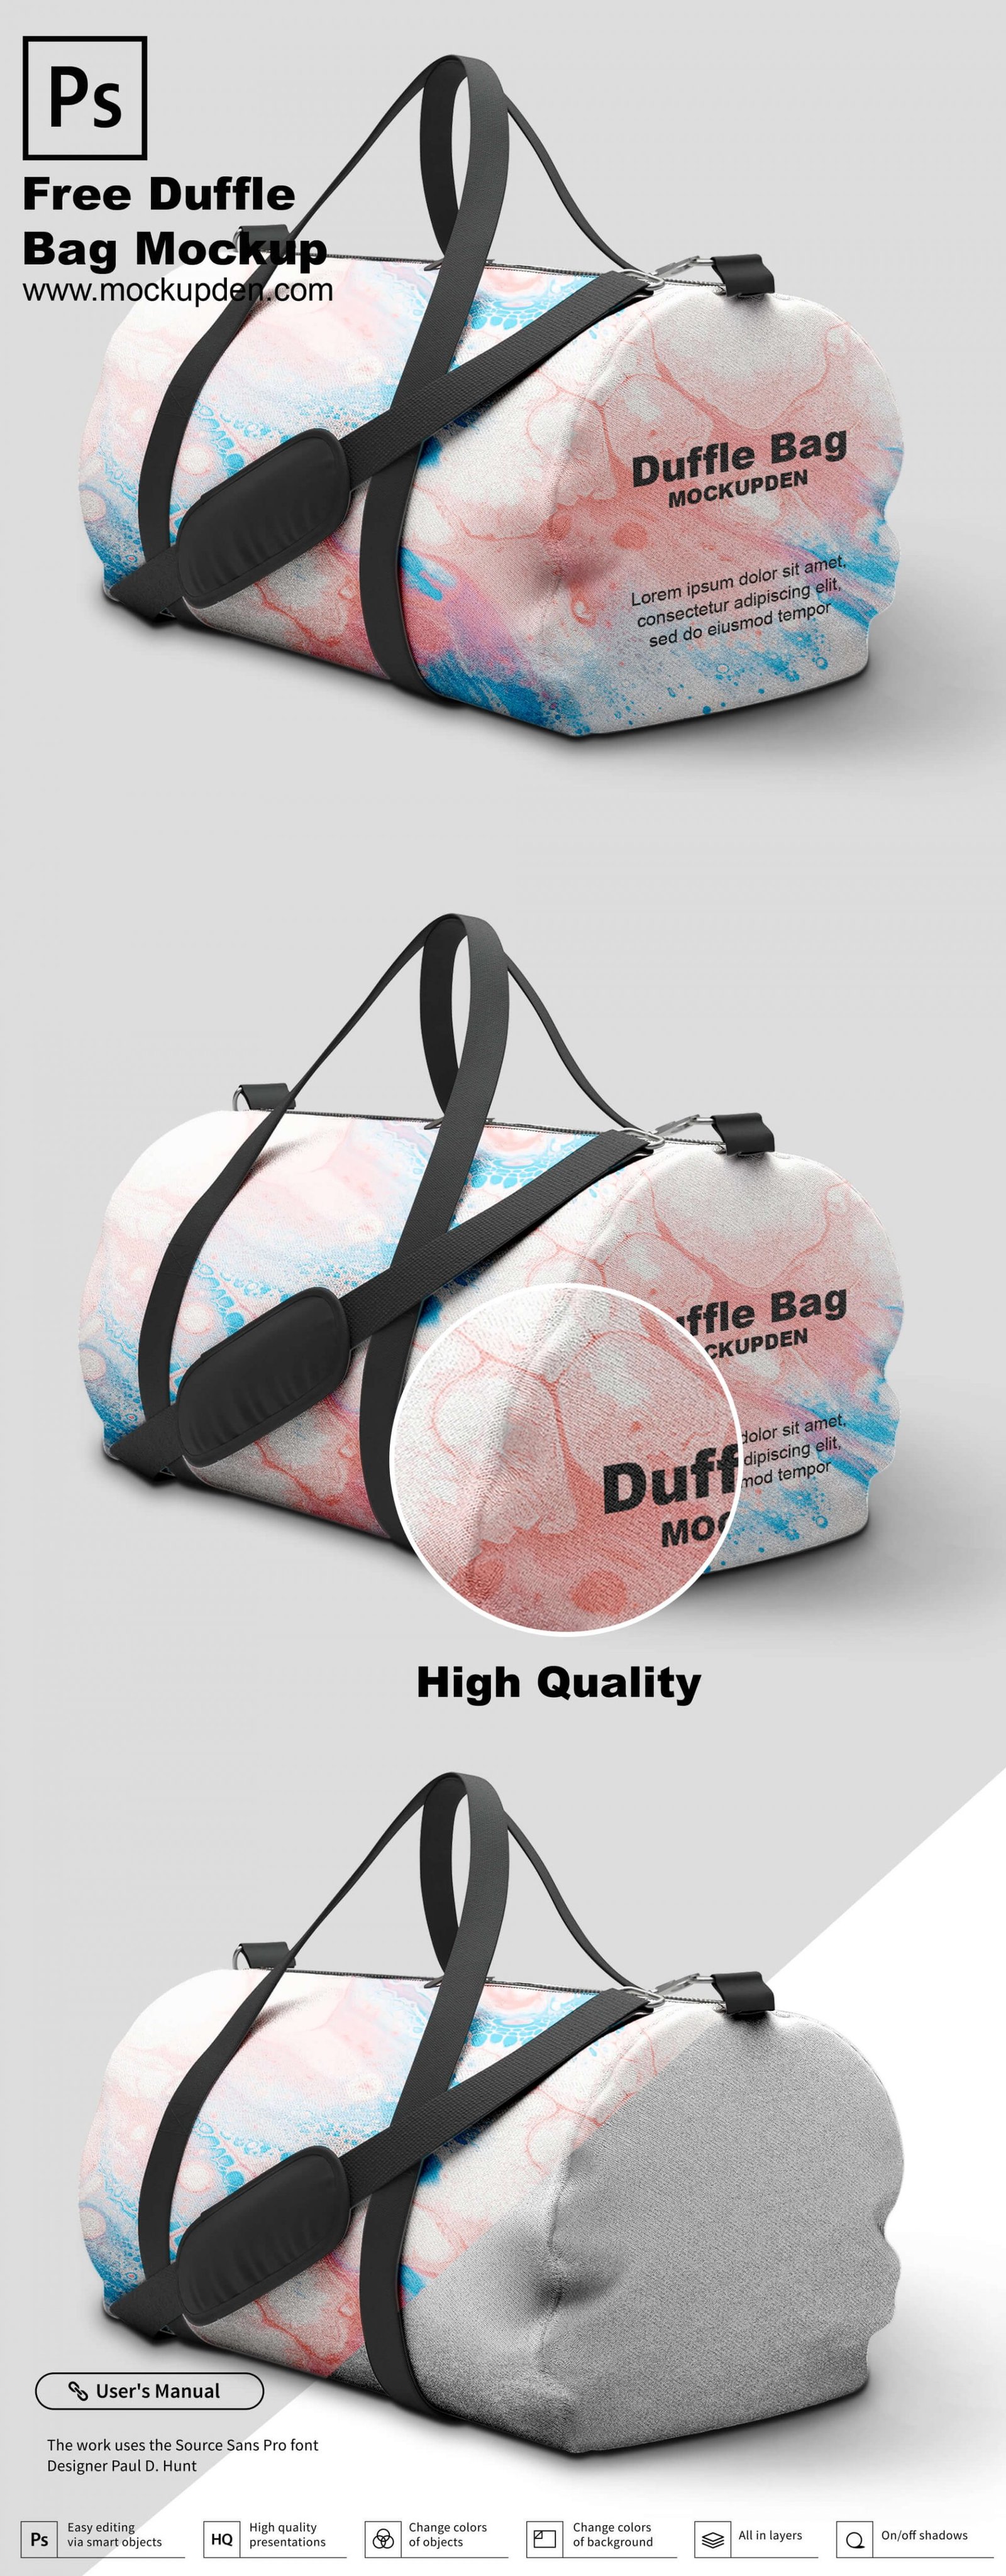 Download Free Duffle Bag Mockup PSD Template | Mockup Den